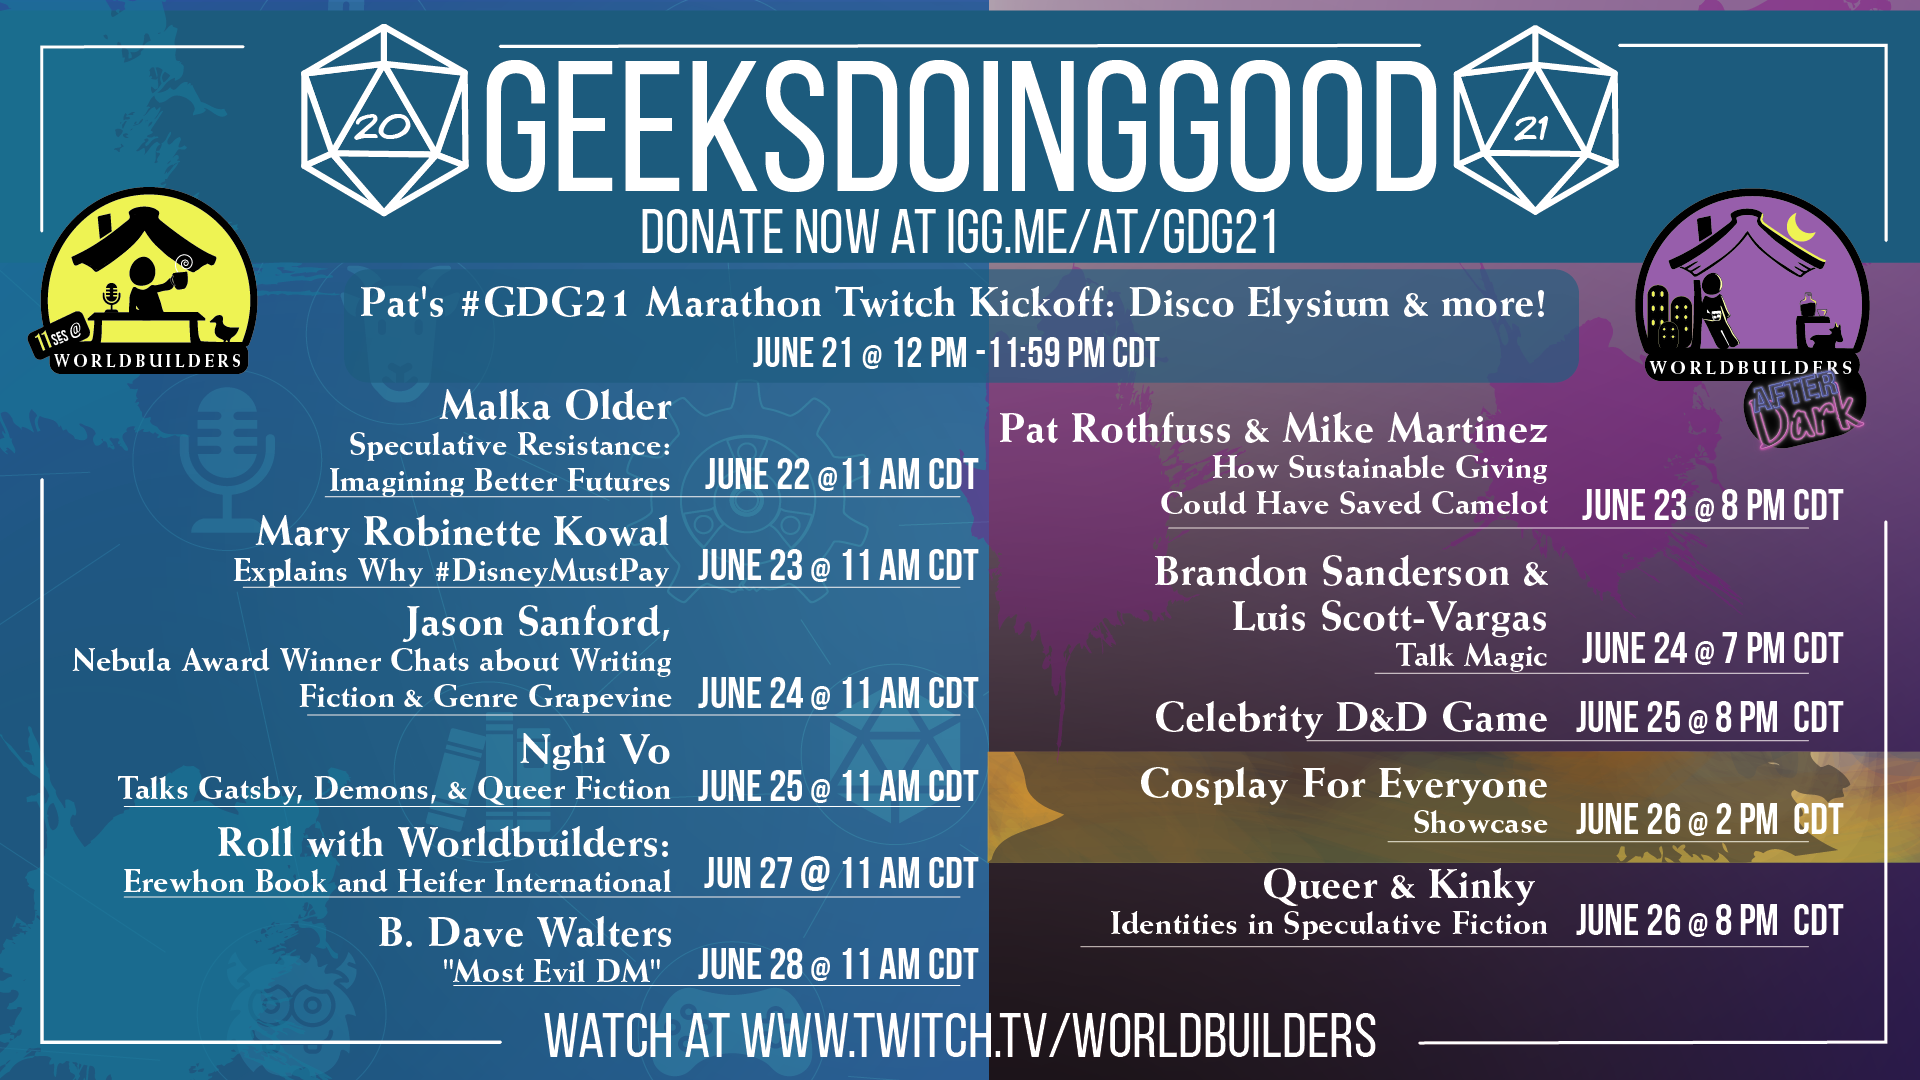 Calendar of events for geeks doing good fundraiser